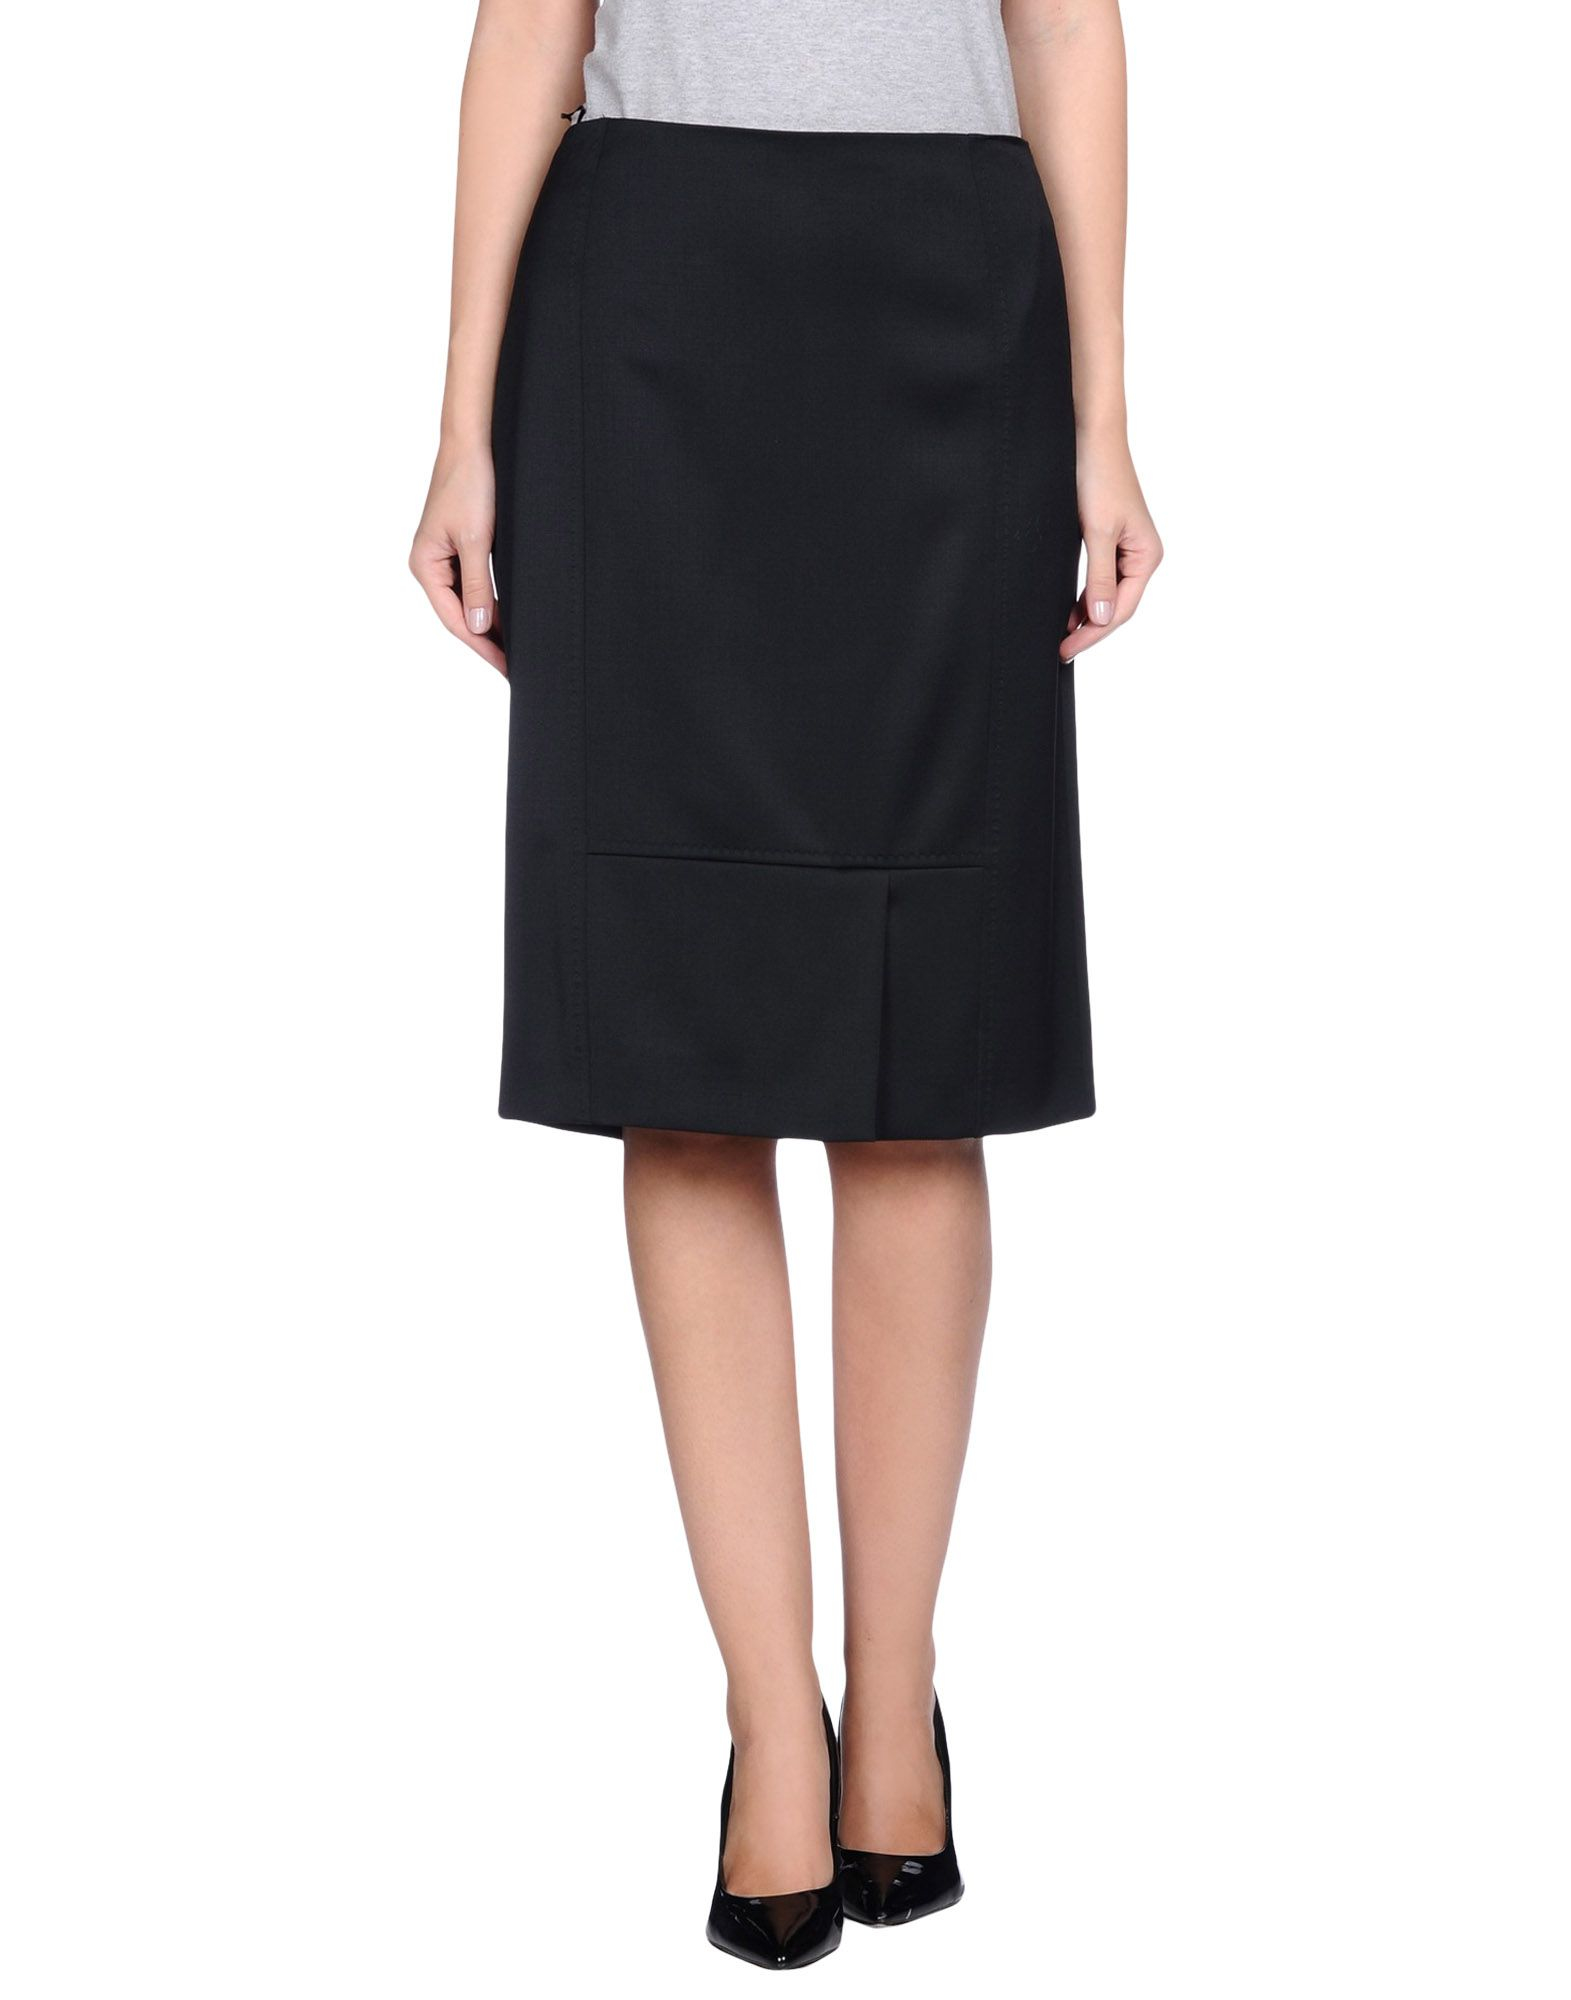 Lyst - Escada 3/4 Length Skirt in Black